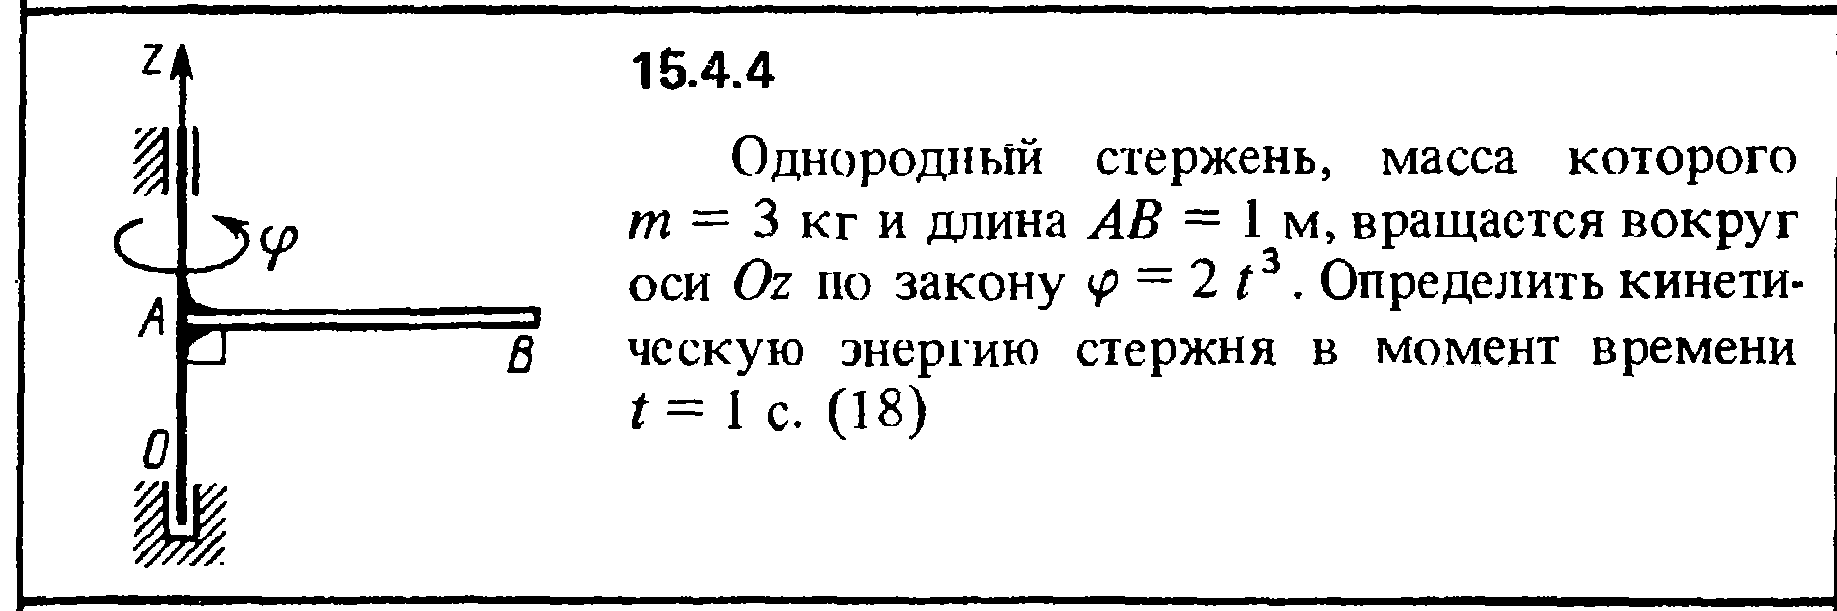 Решение задачи 15.4.4 из сборника Кепе О.Е. 1989 года